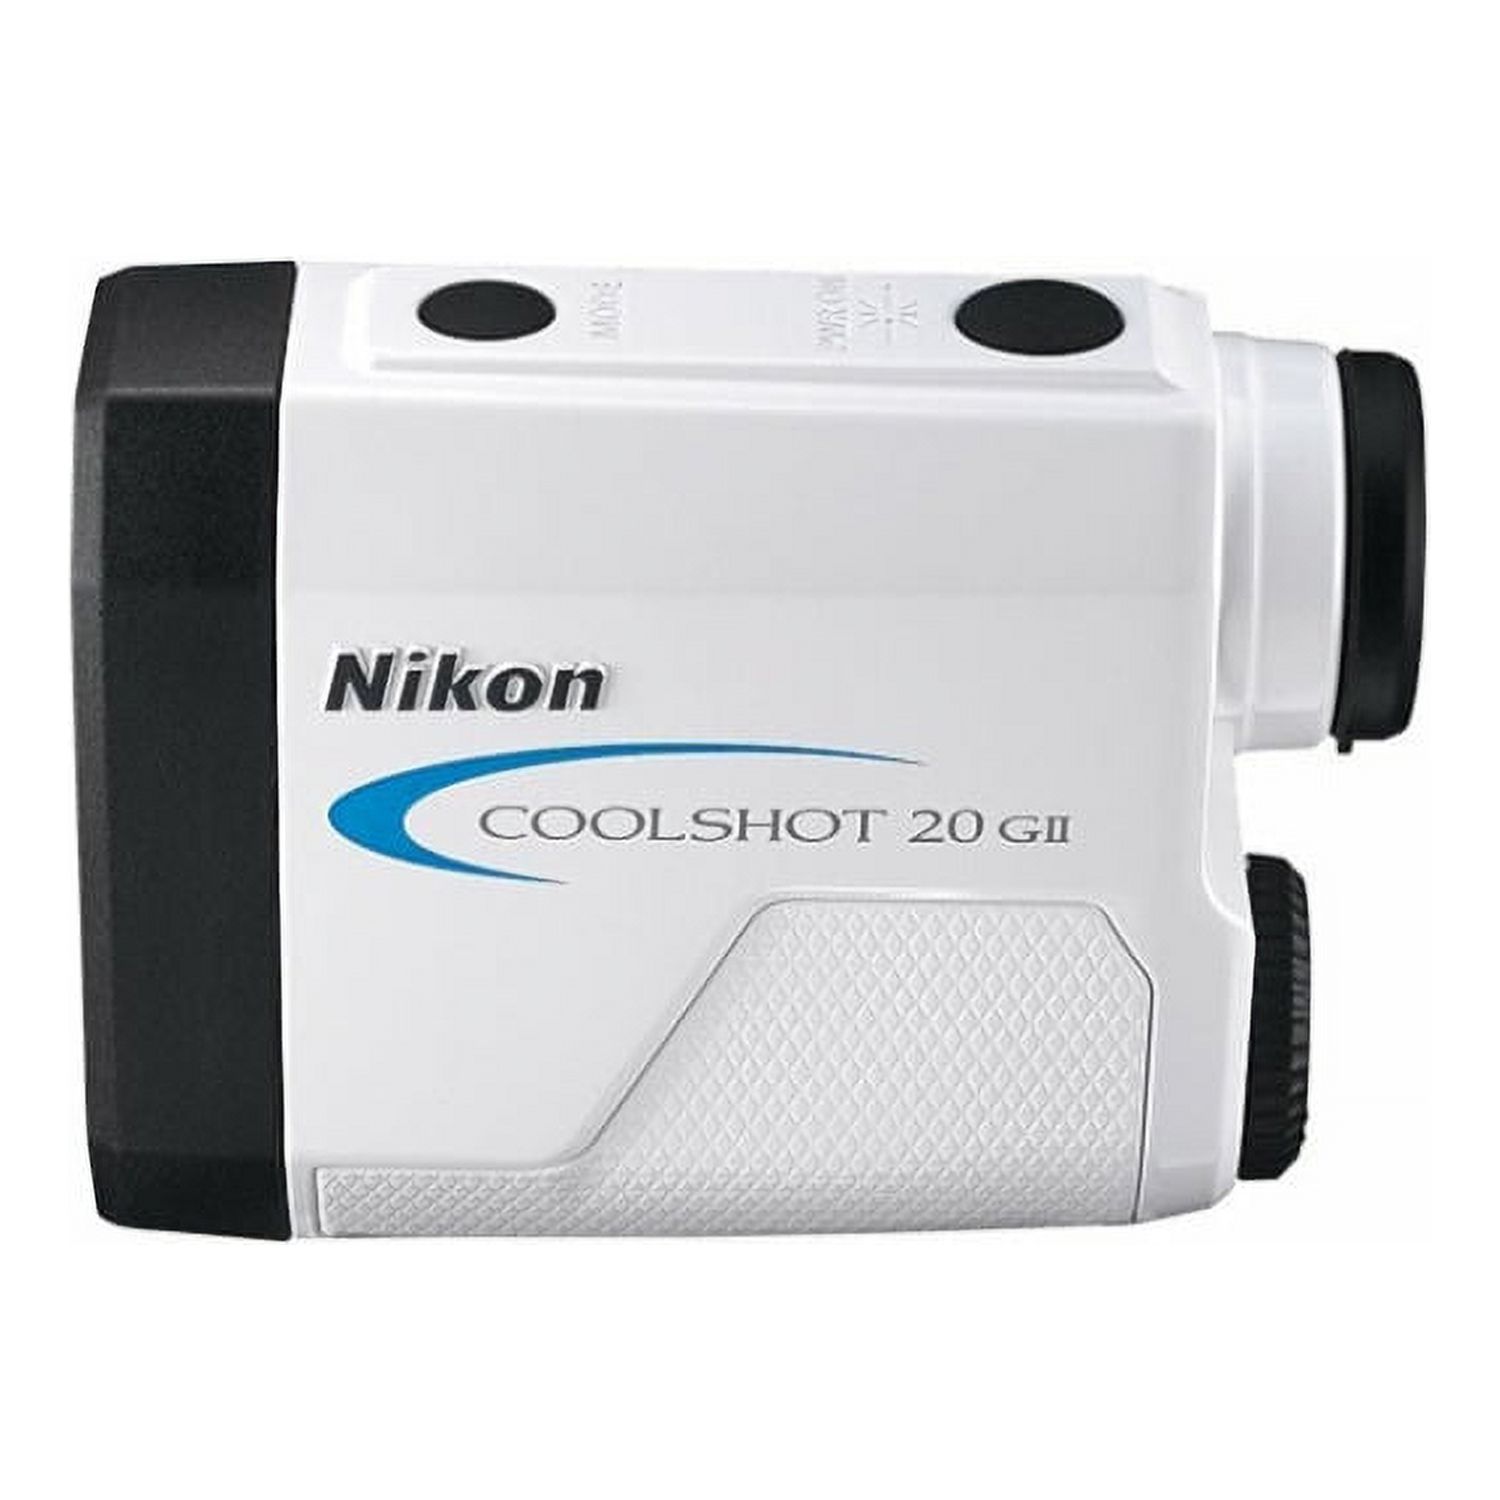 Nikon COOLSHOT 20 GII Golf Laser Rangefinder - image 3 of 4